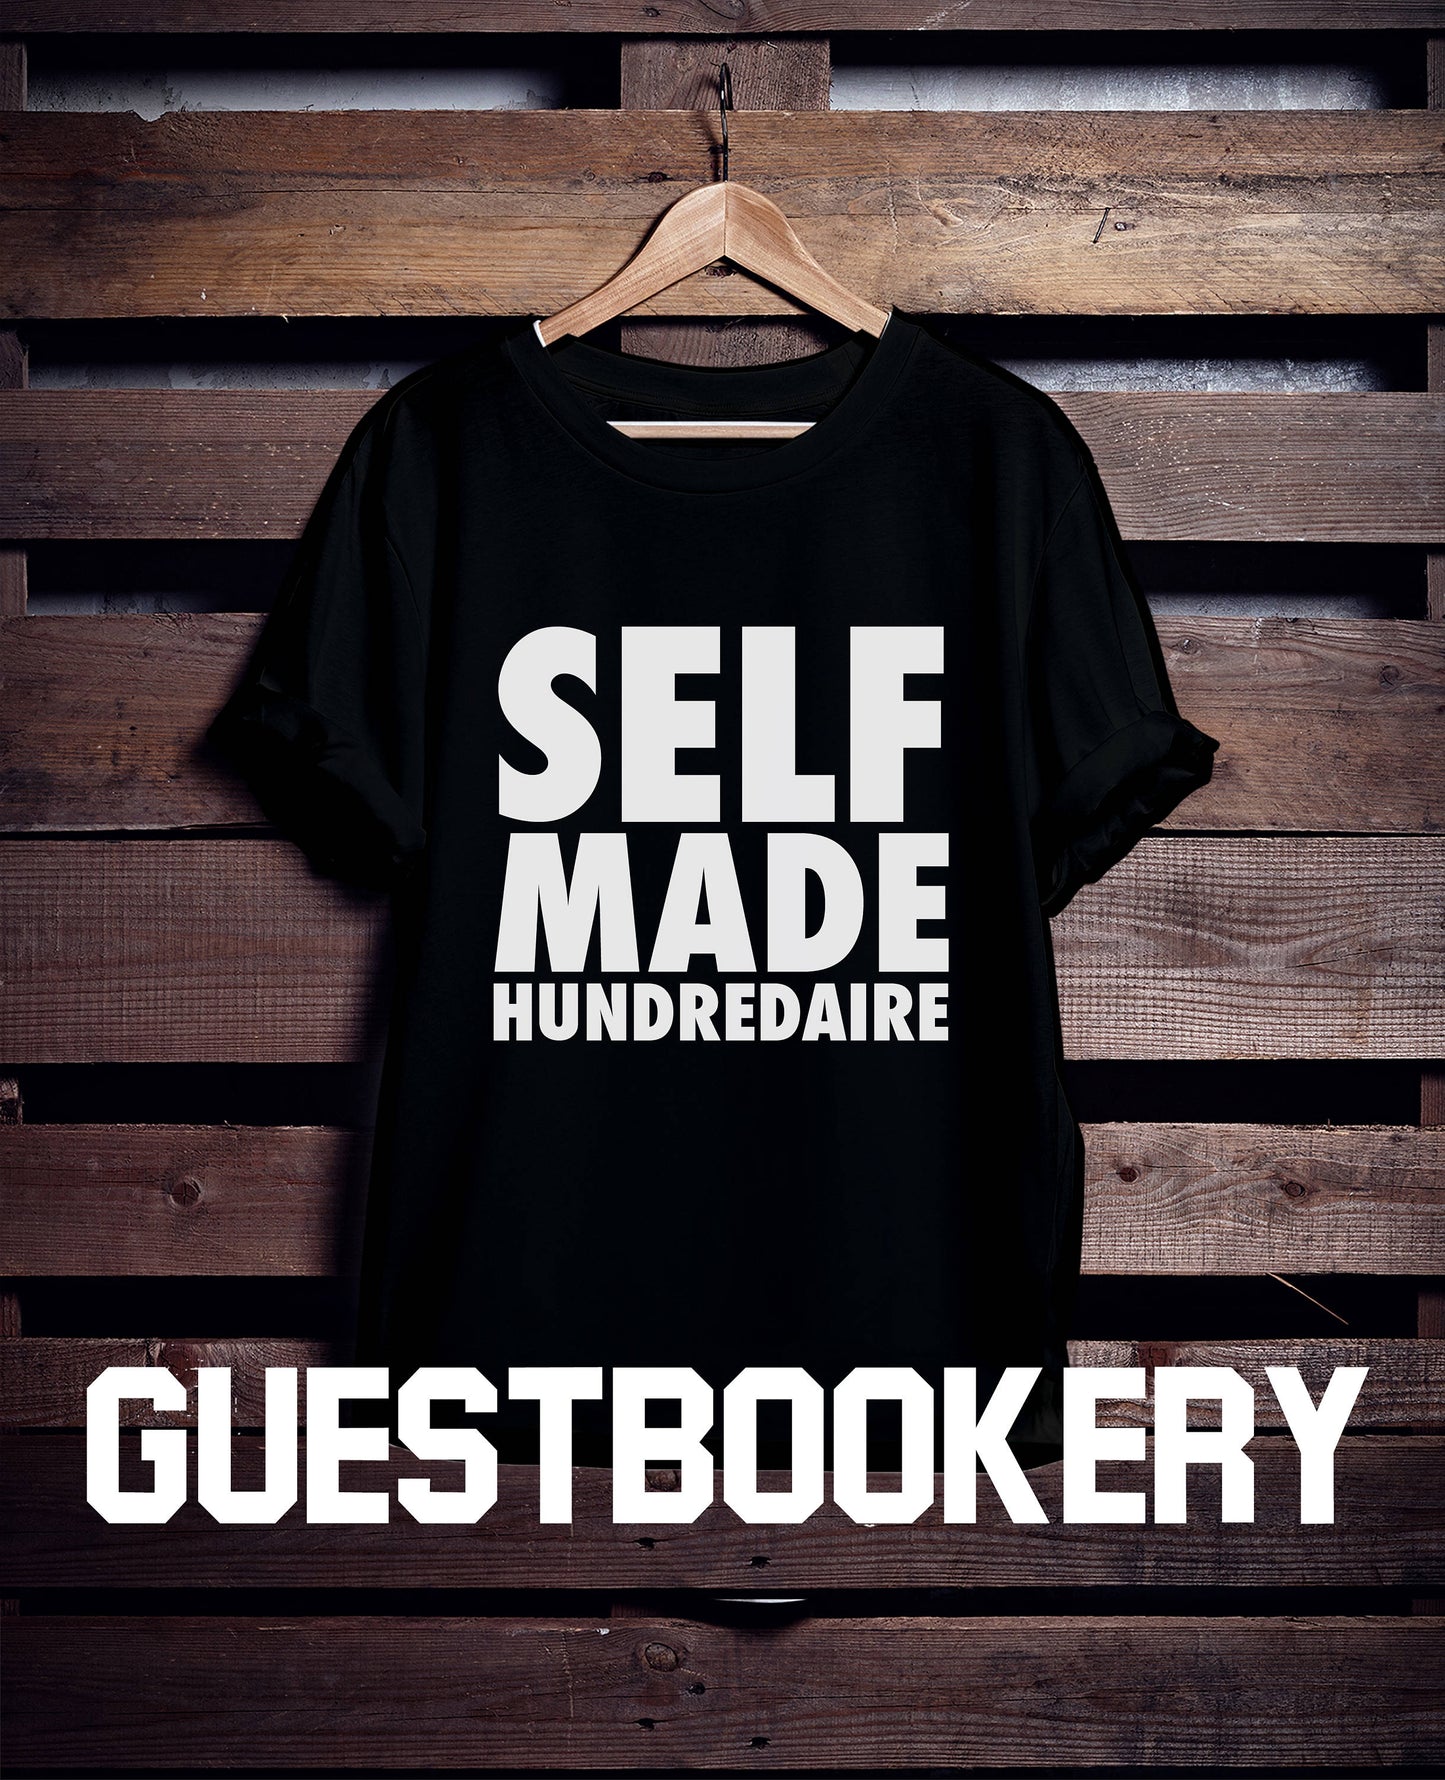 Self-made Hundredaire T-shirt